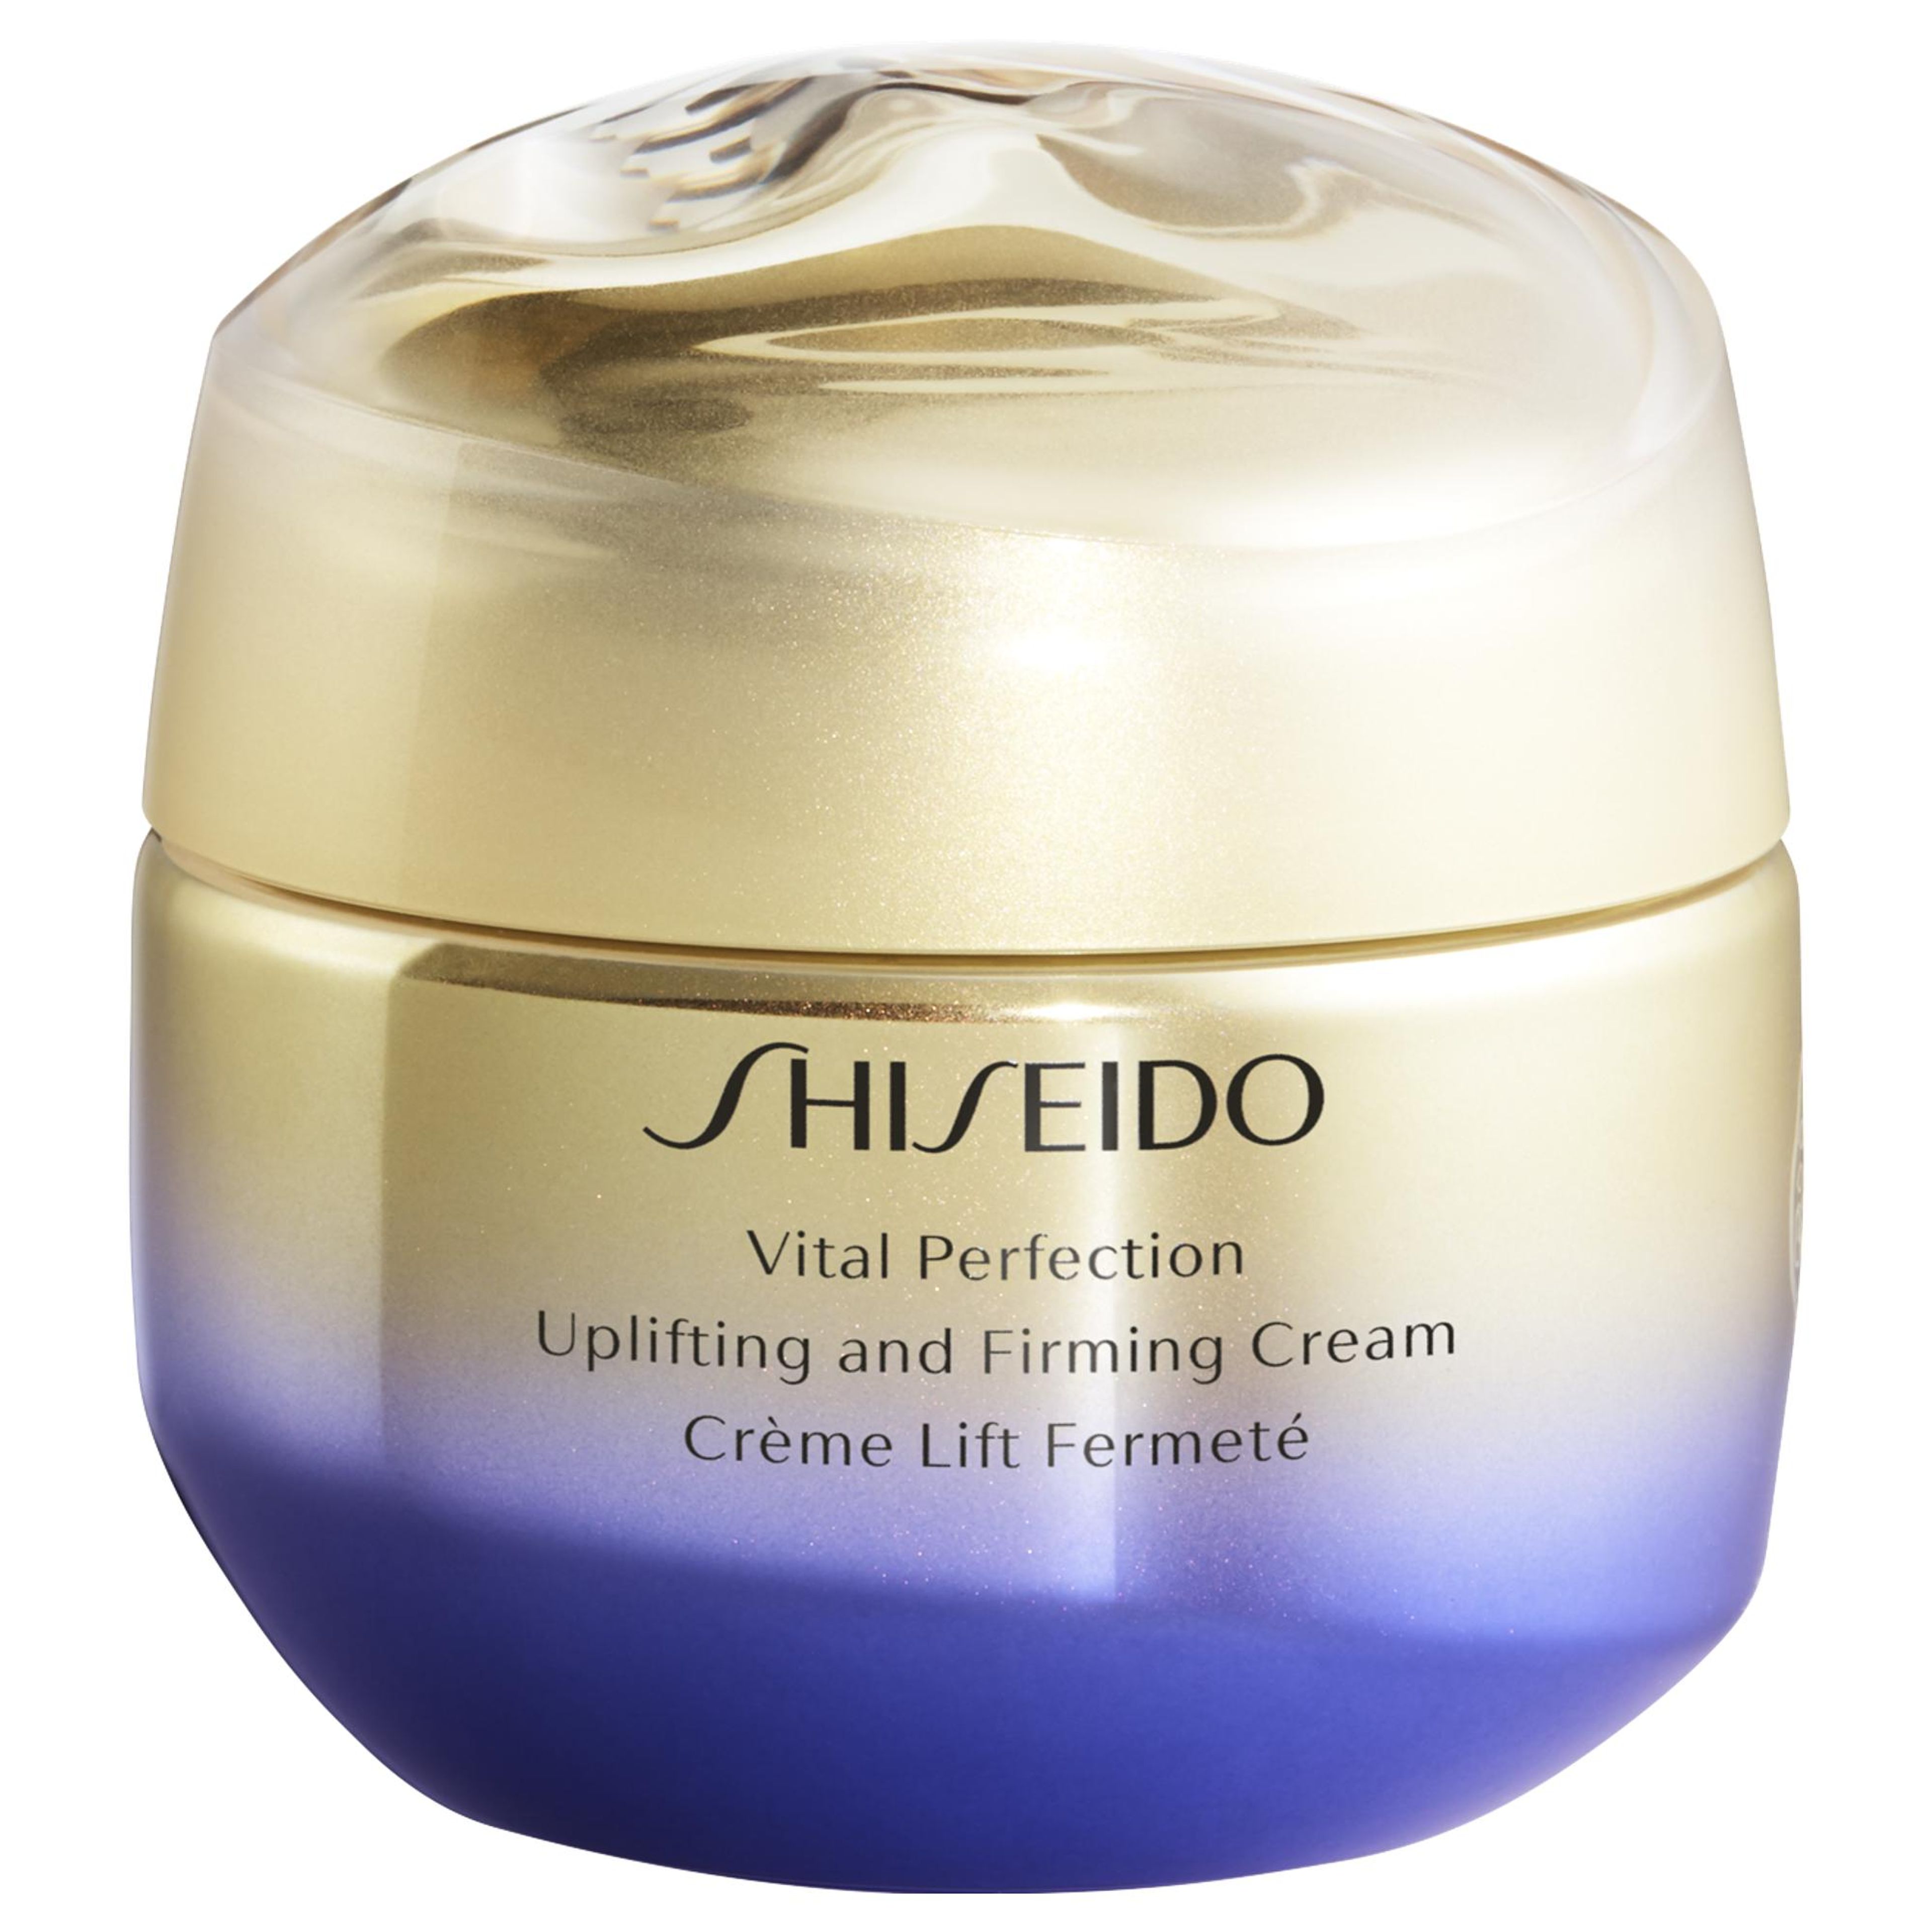 Shiseido Uplifting And Firming Cream 6